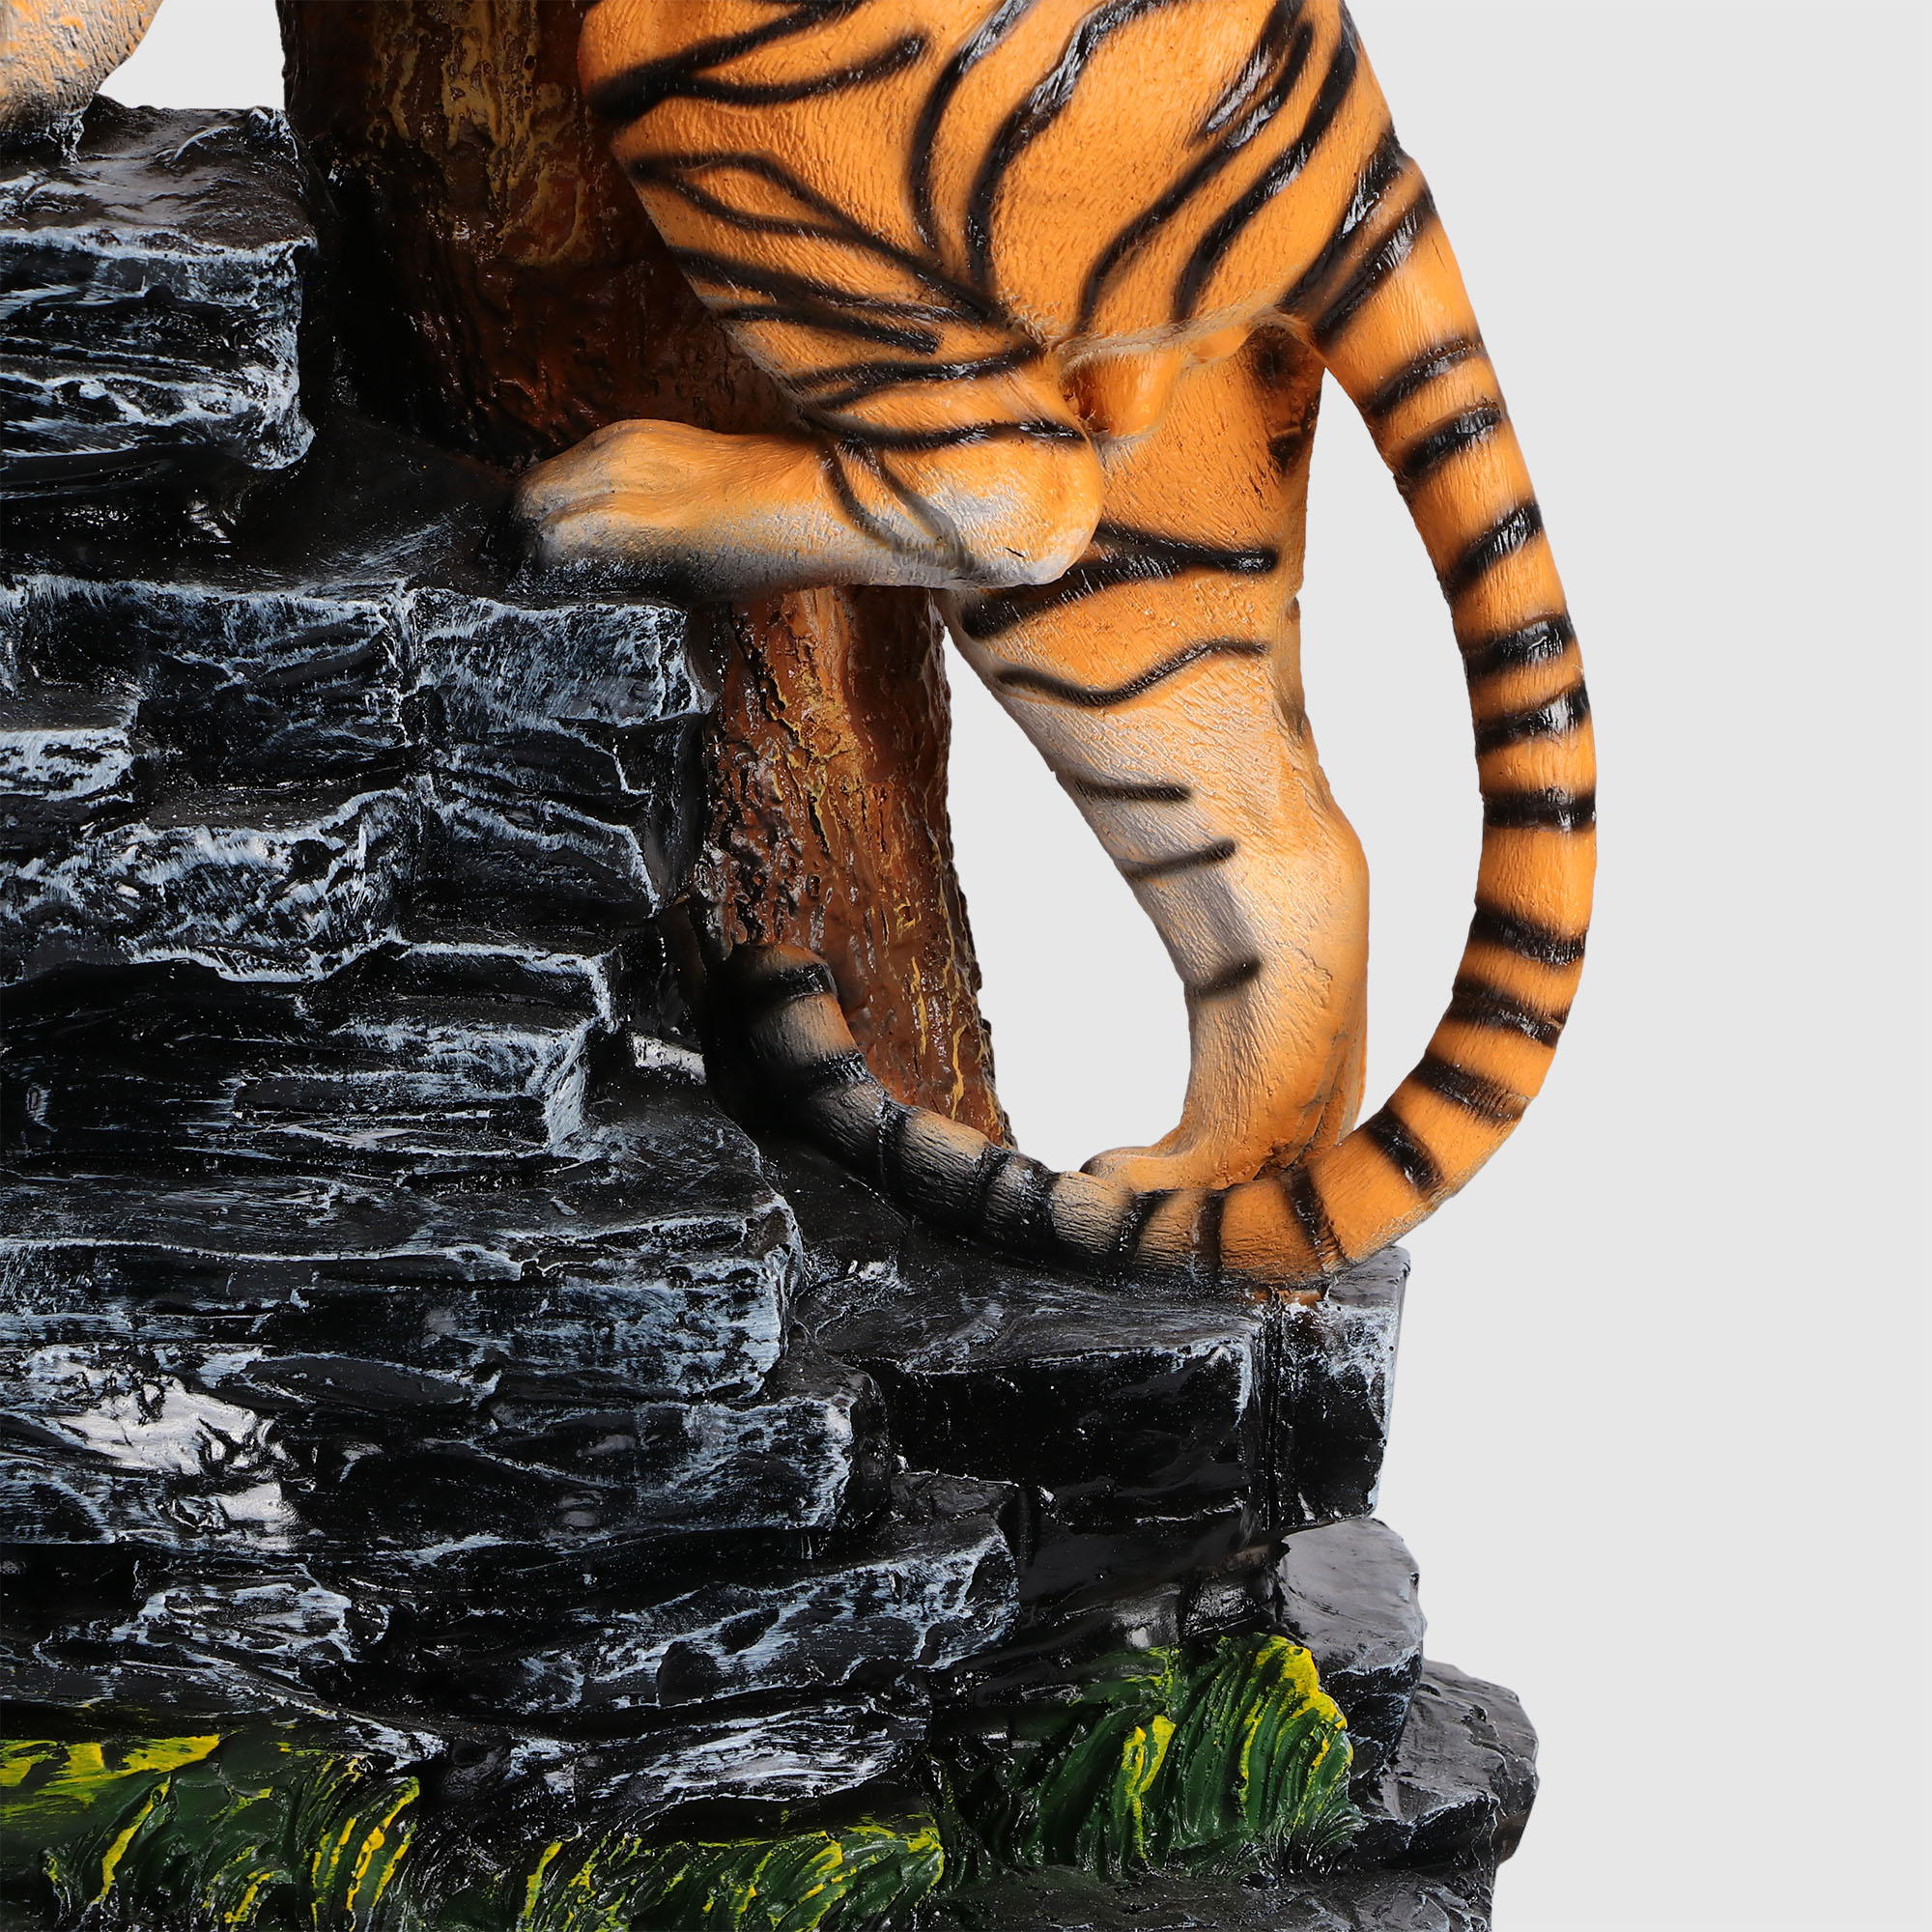 фото Фигура тпк полиформ тигр на камнях 66 см